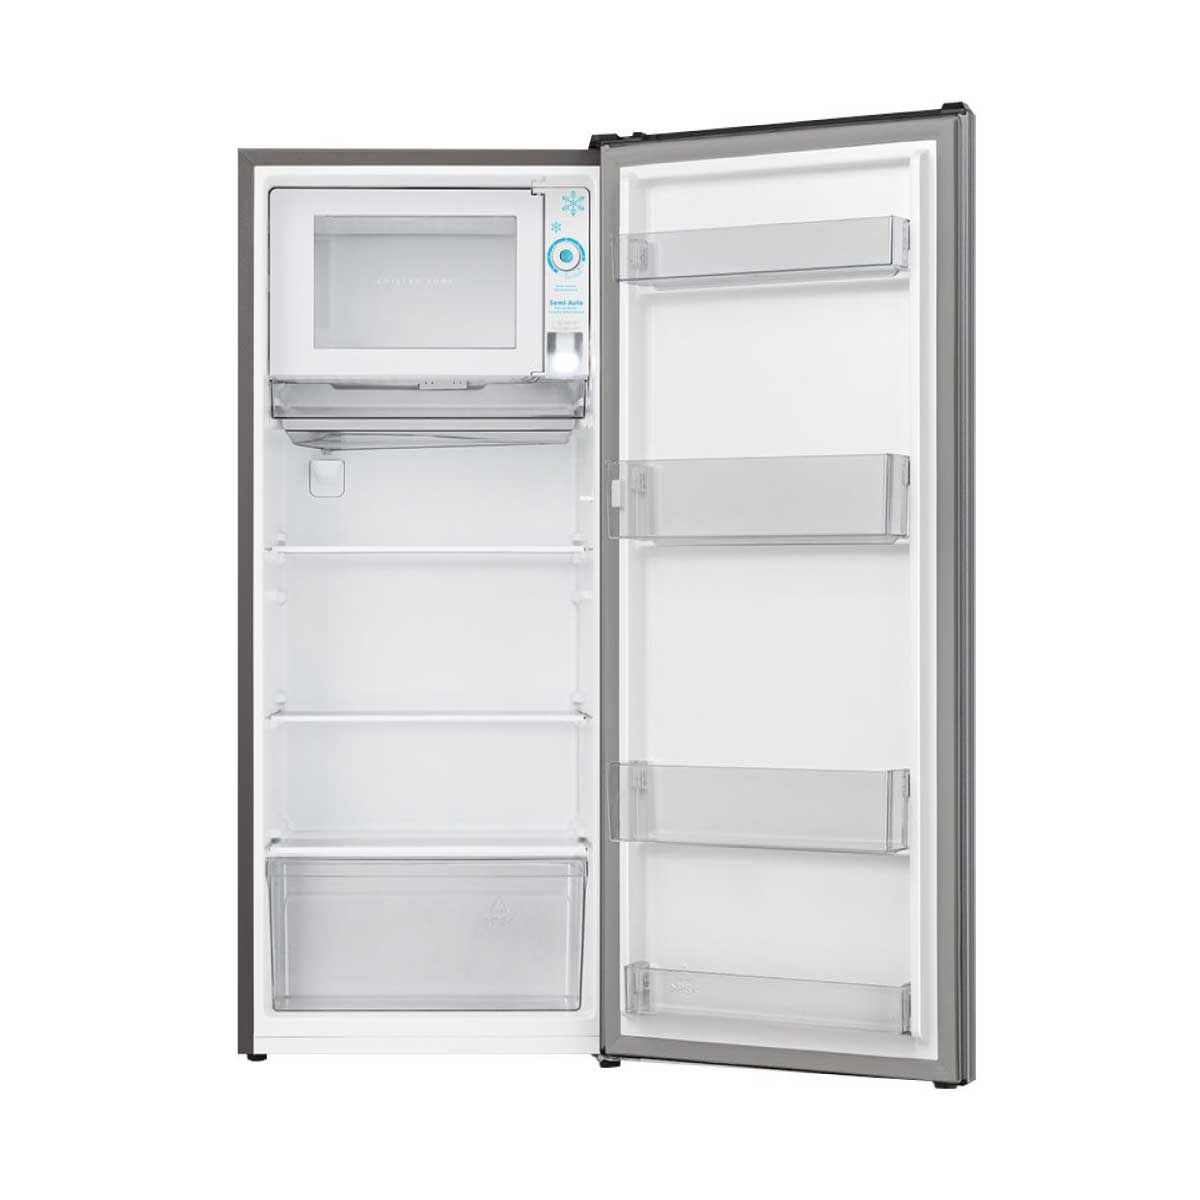 HISENSE  ตู้เย็น 1ประตู 5.5Q สีเงิน รุ่นRR209D4TGN